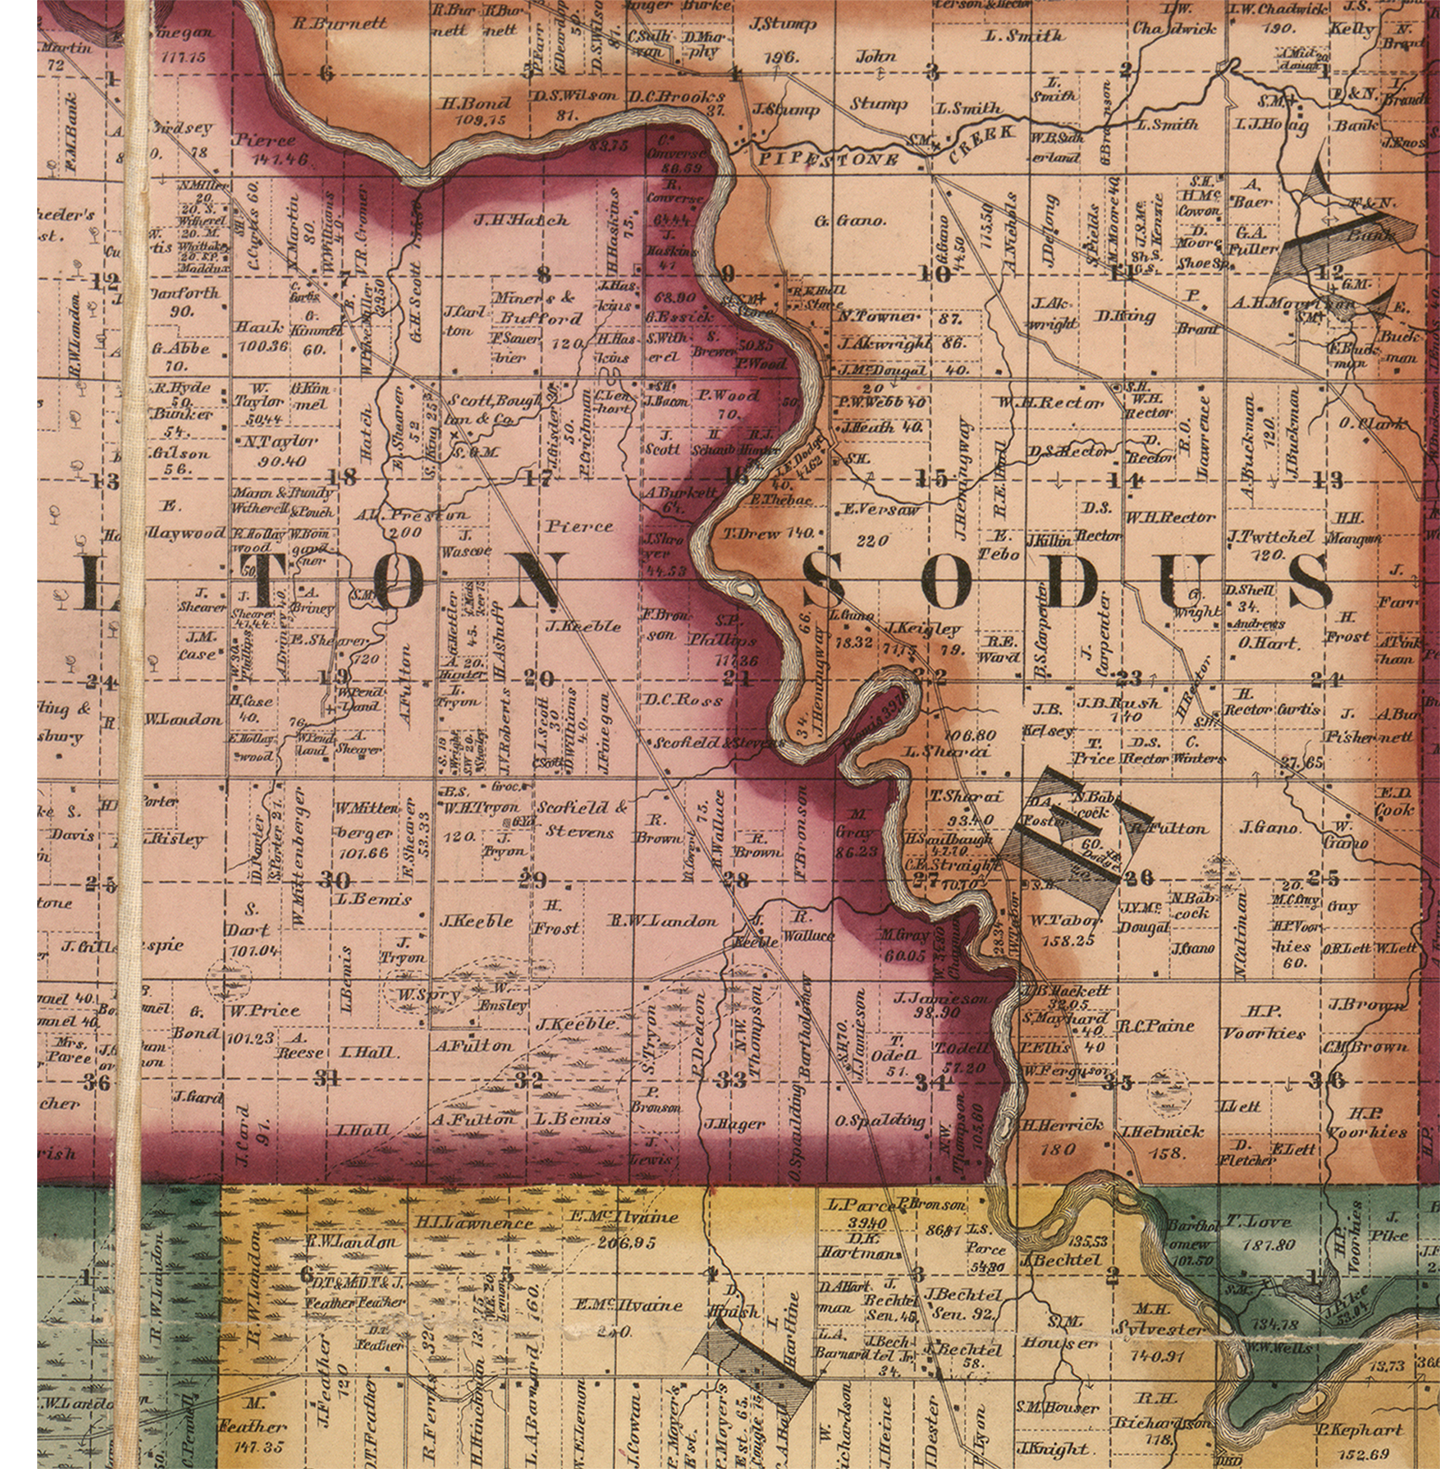 1860 Sodus Township, Michigan landownership map